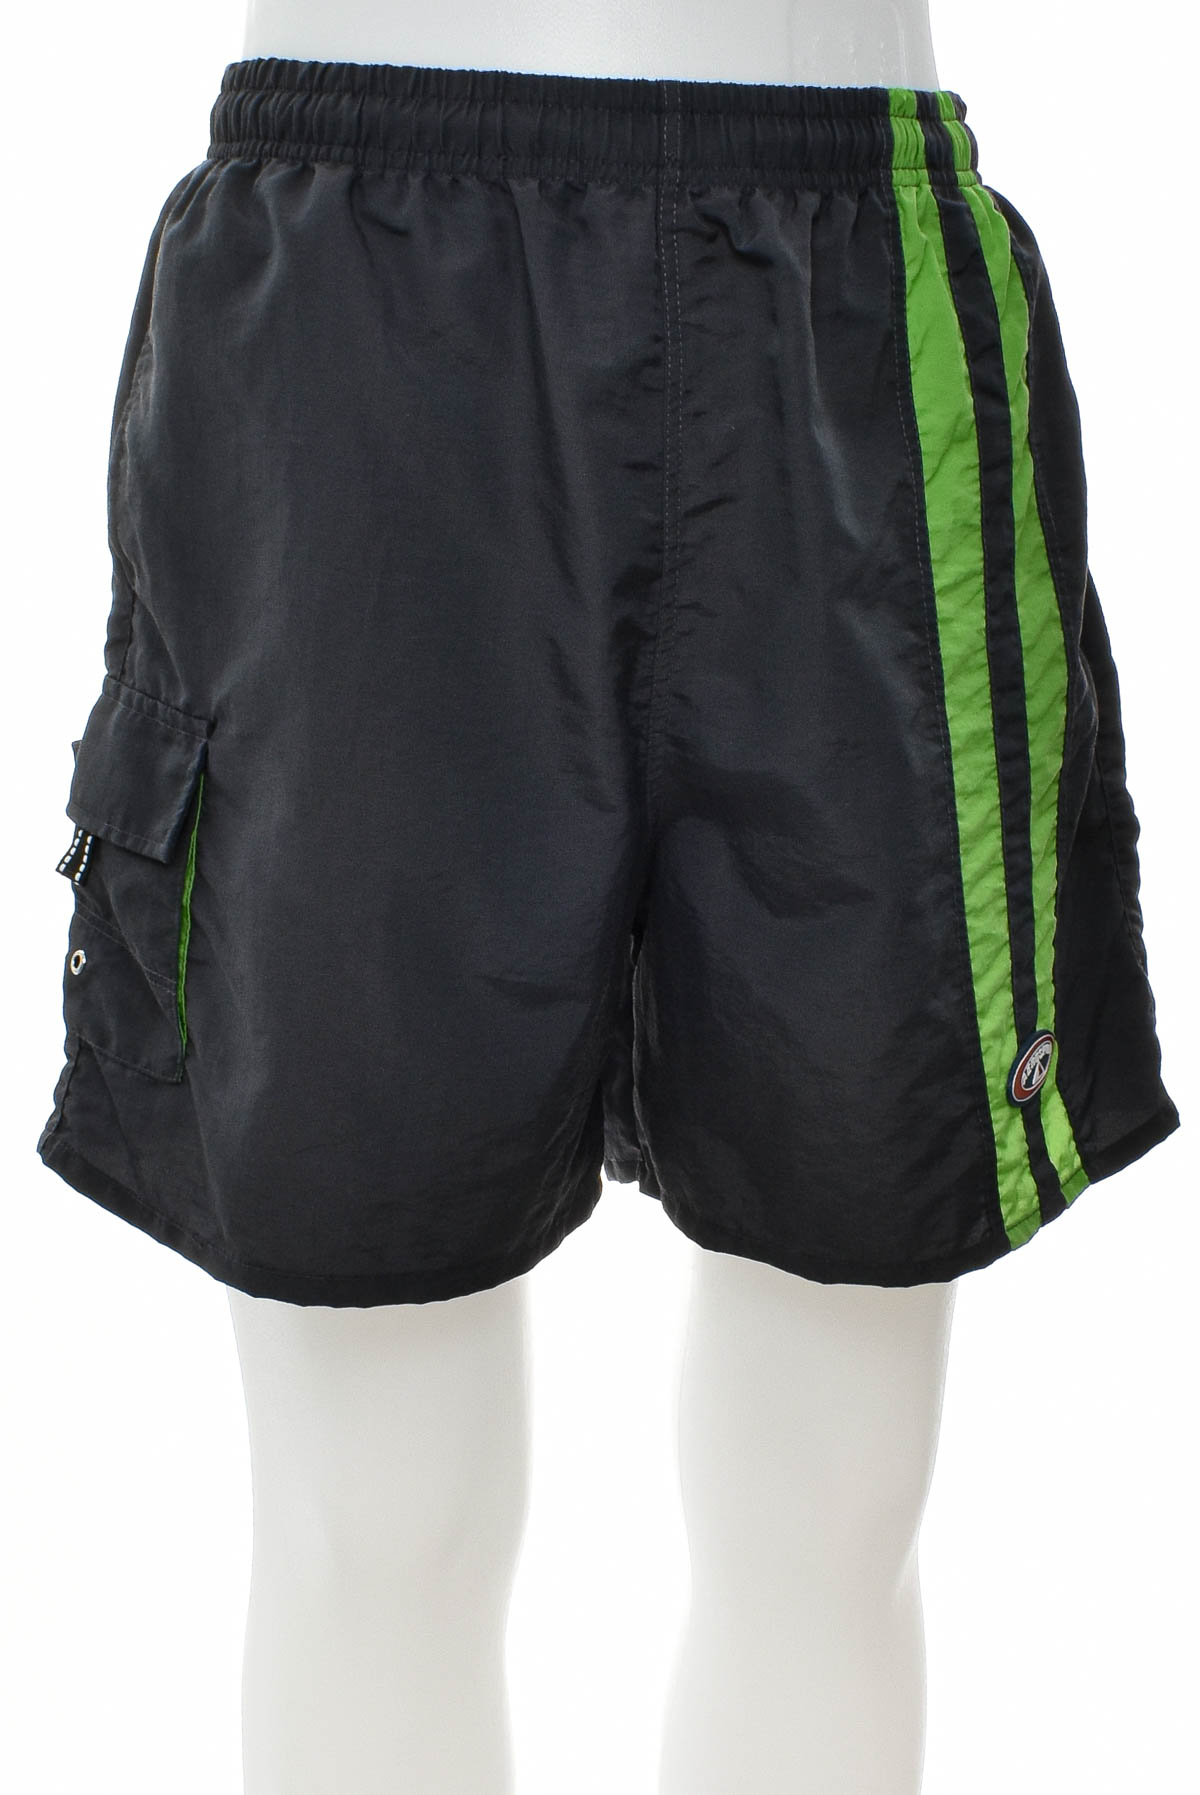 Men's shorts - Aerospin - 0